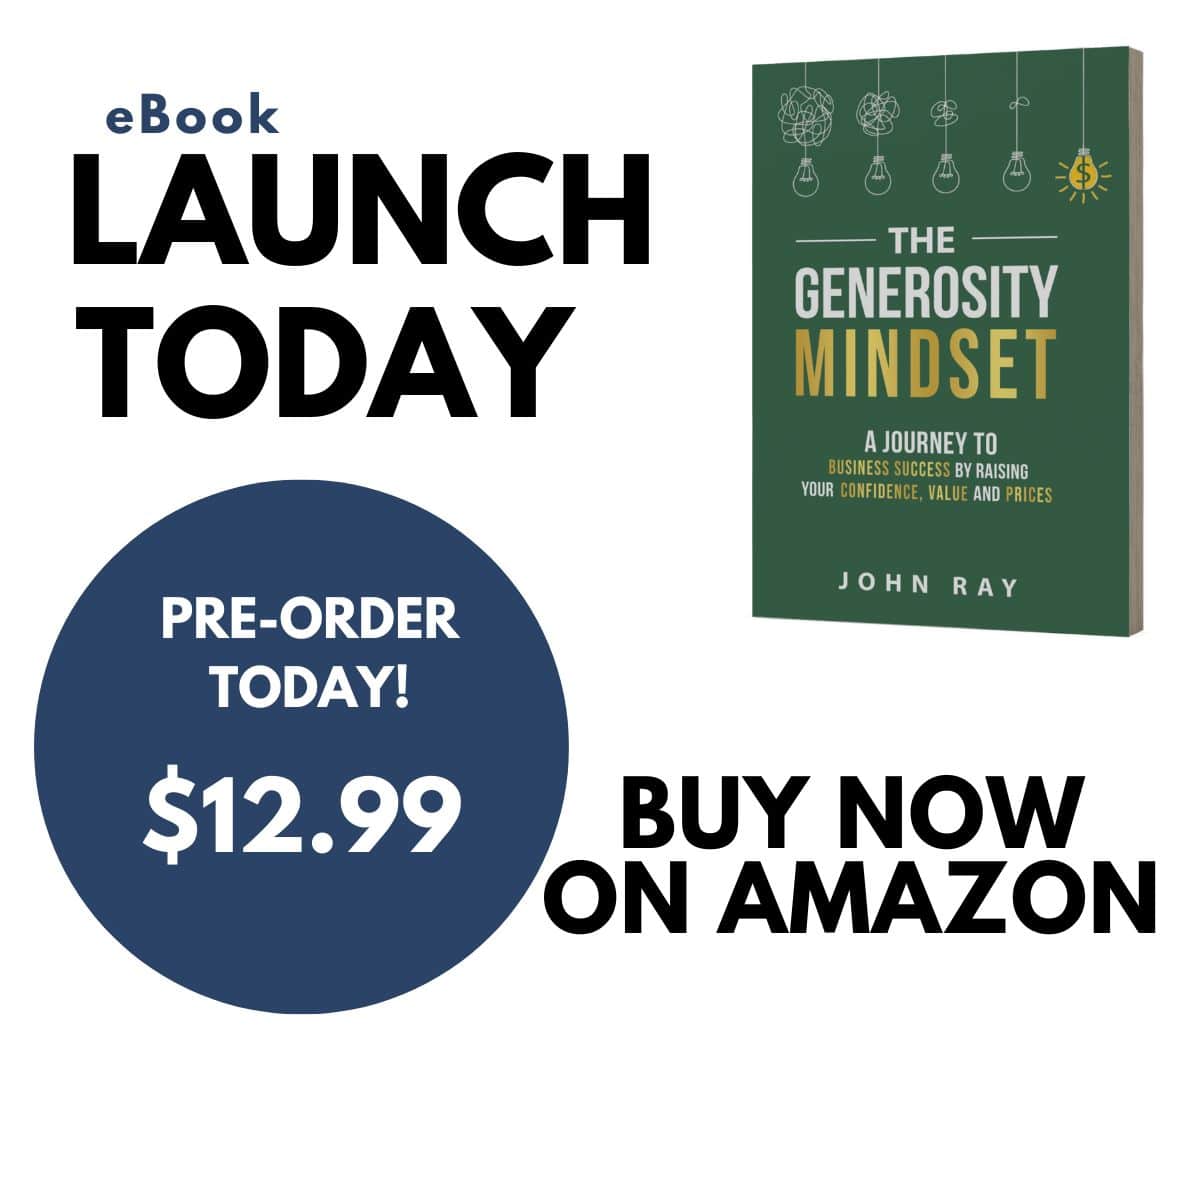 Release of The Generosity Mindset